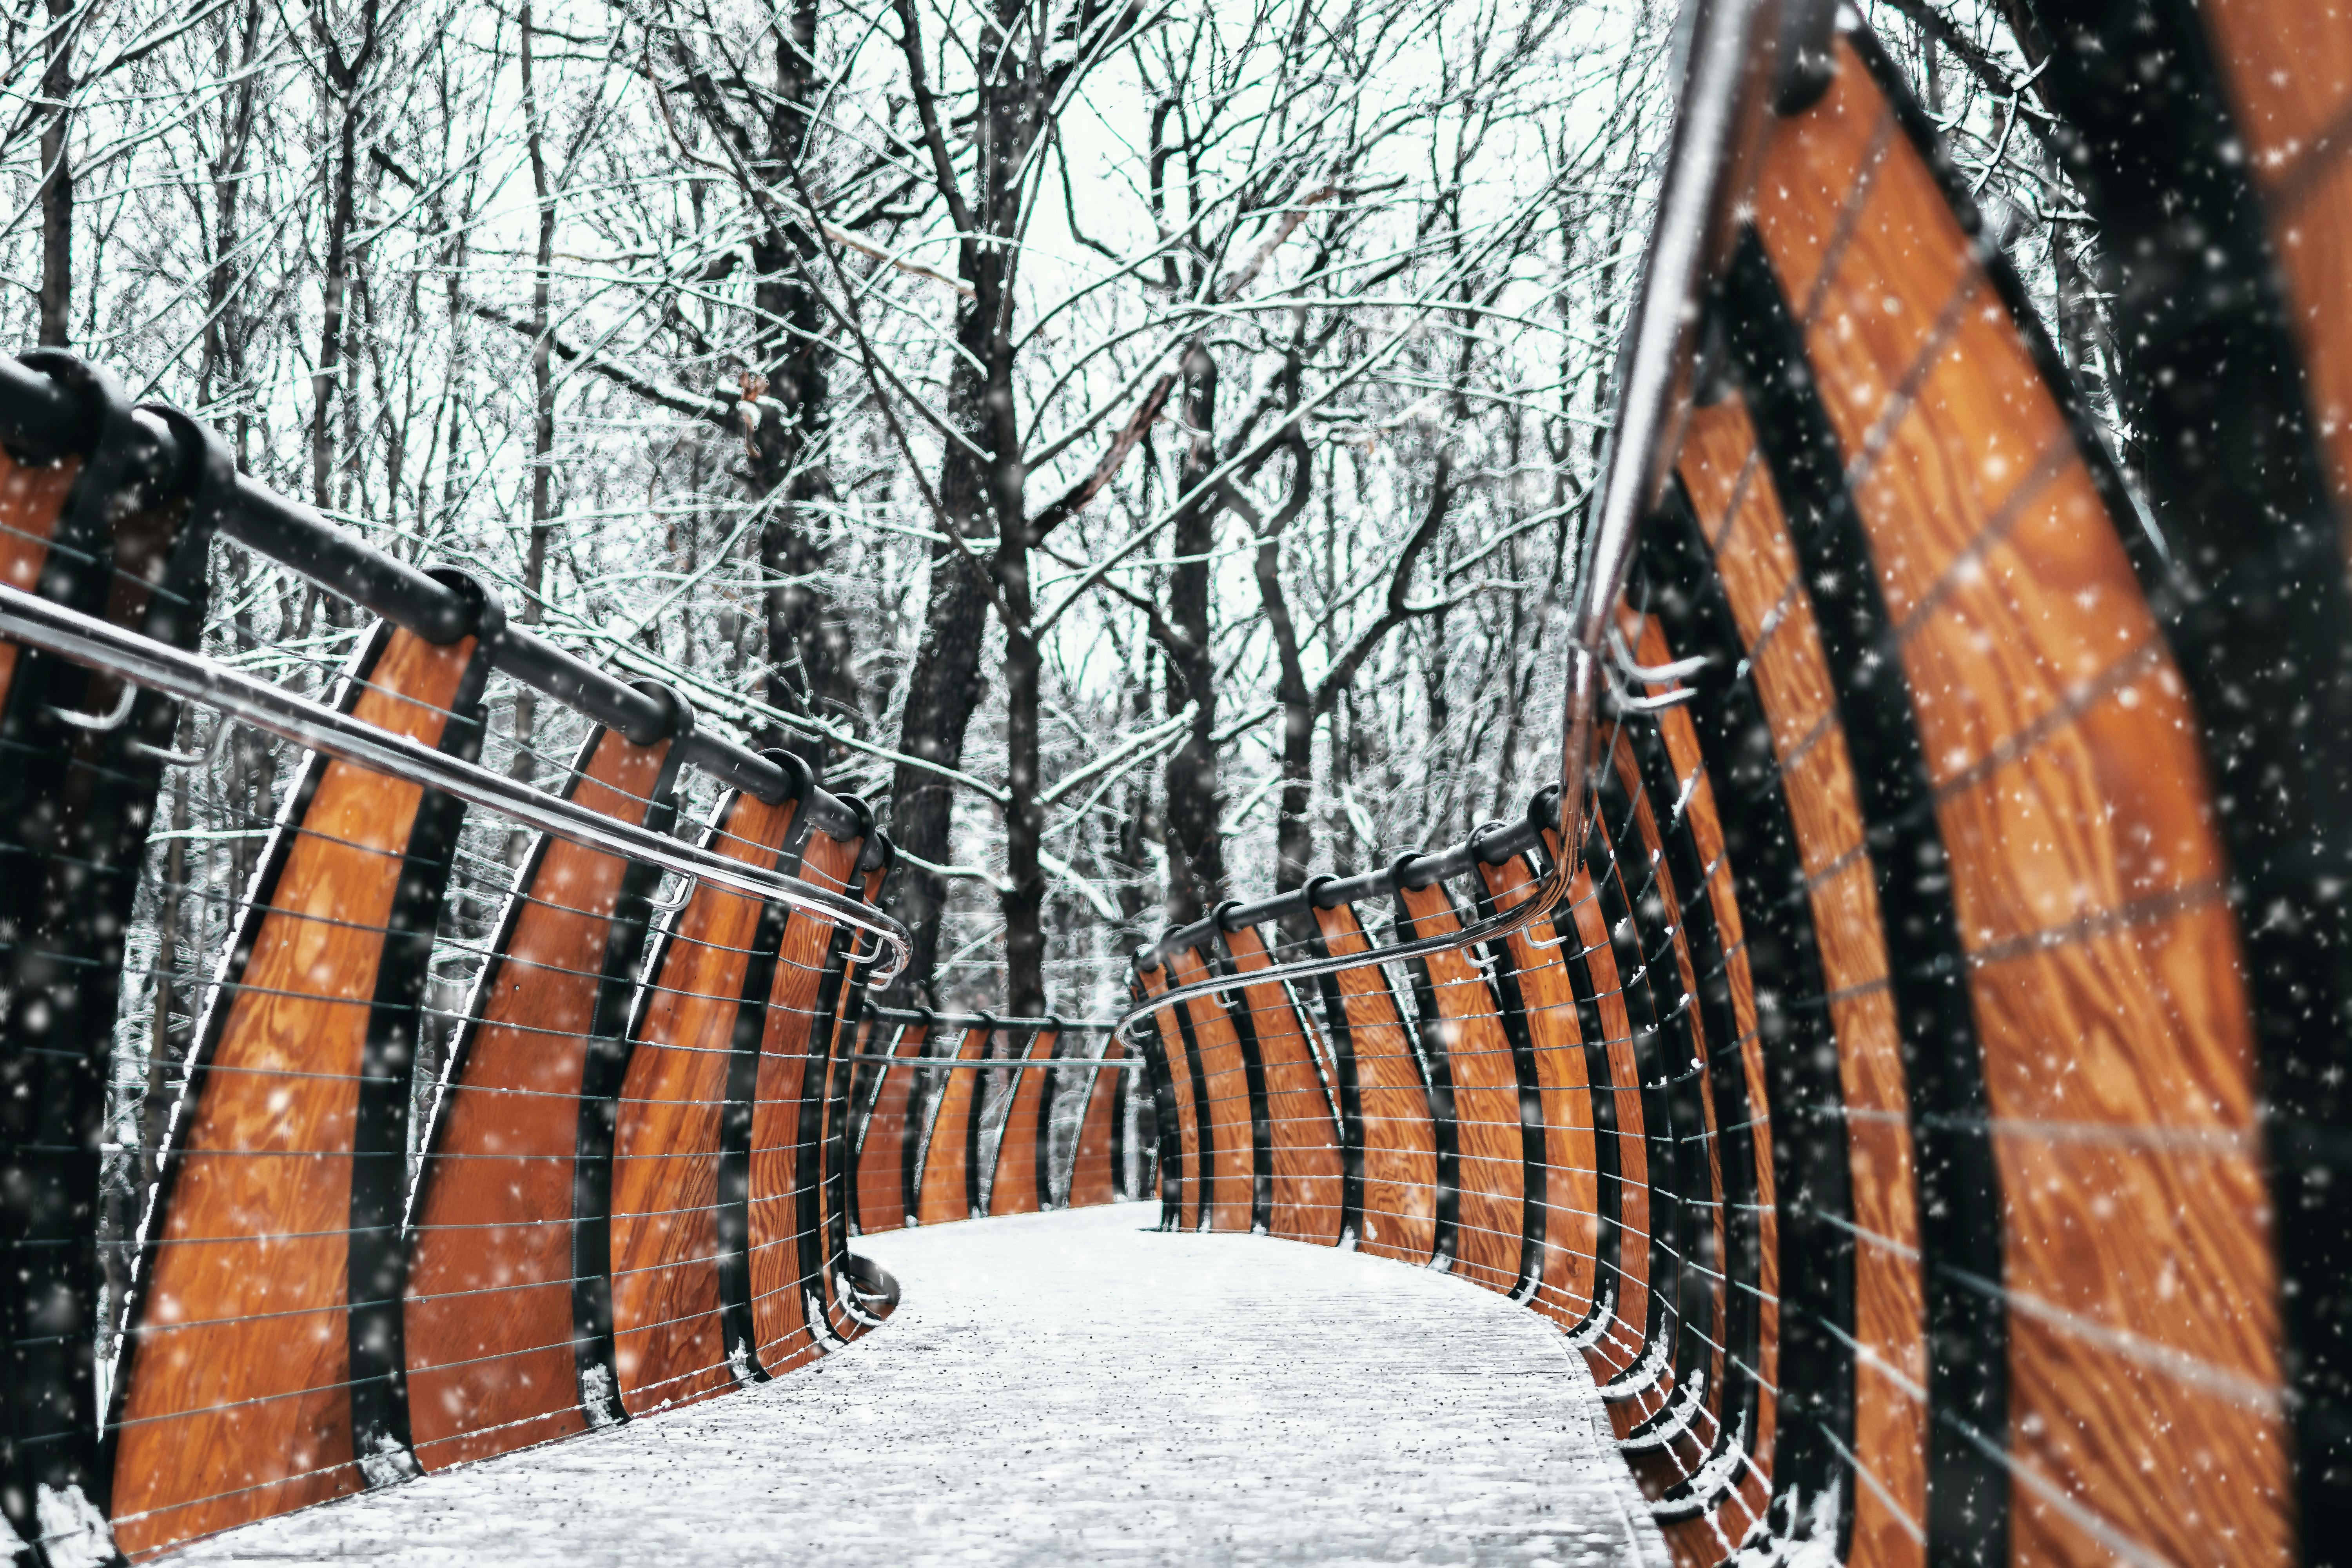 a snow covered bridge